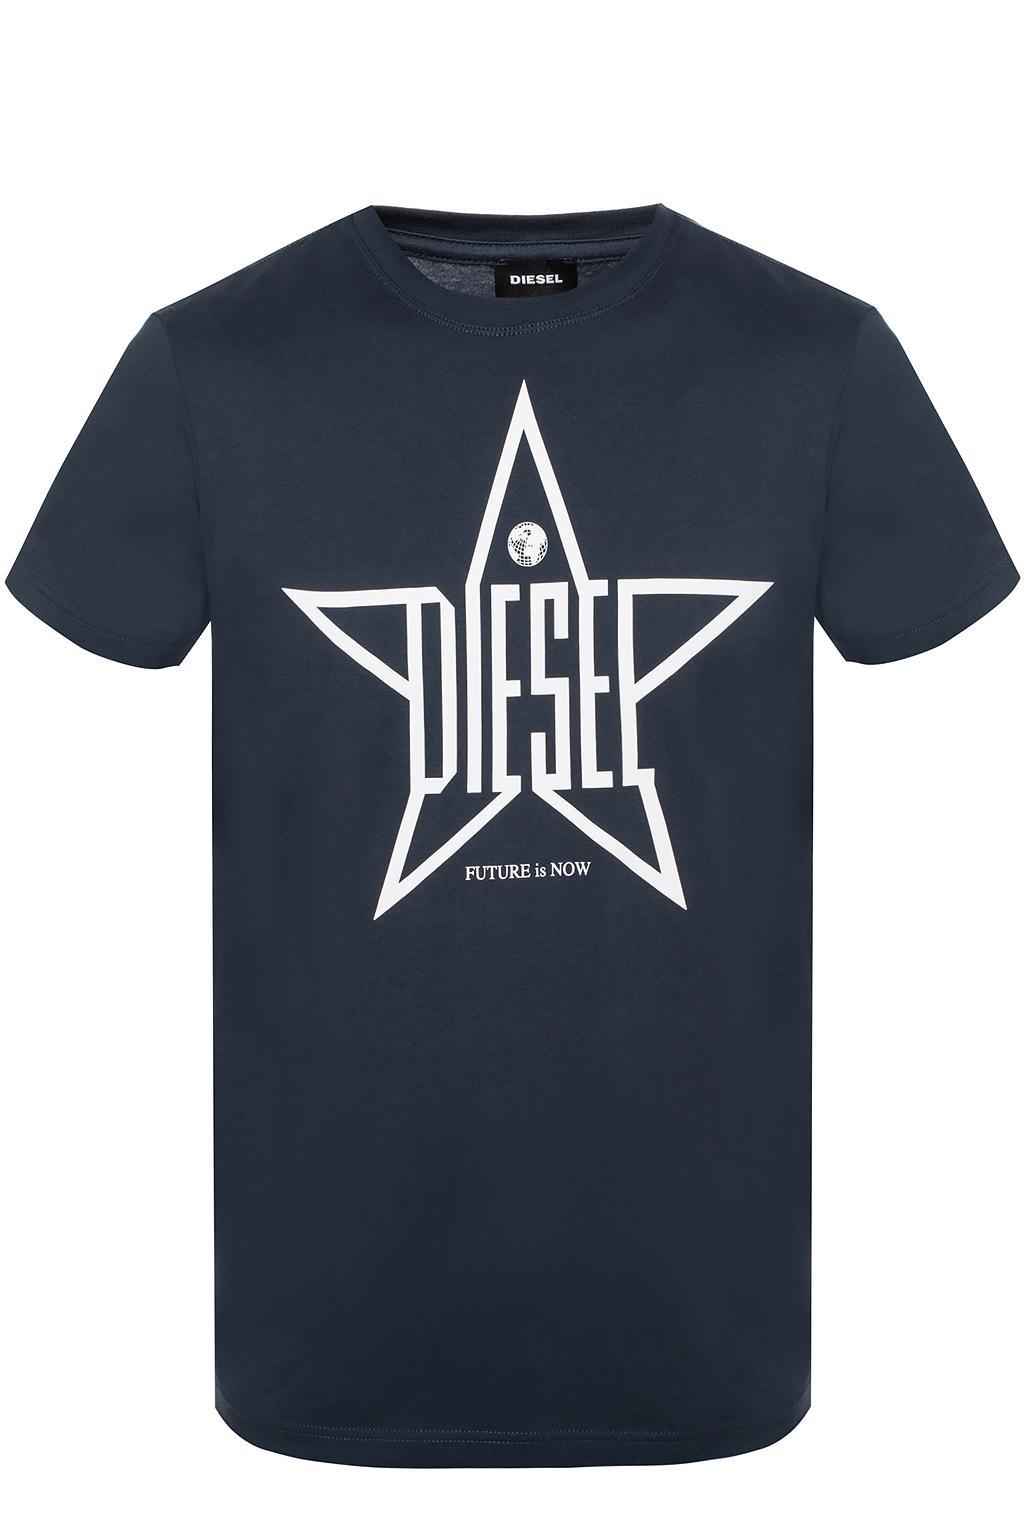 DIESEL Cotton Logo-printed T-shirt in Navy Blue (Blue) for Men - Save ...